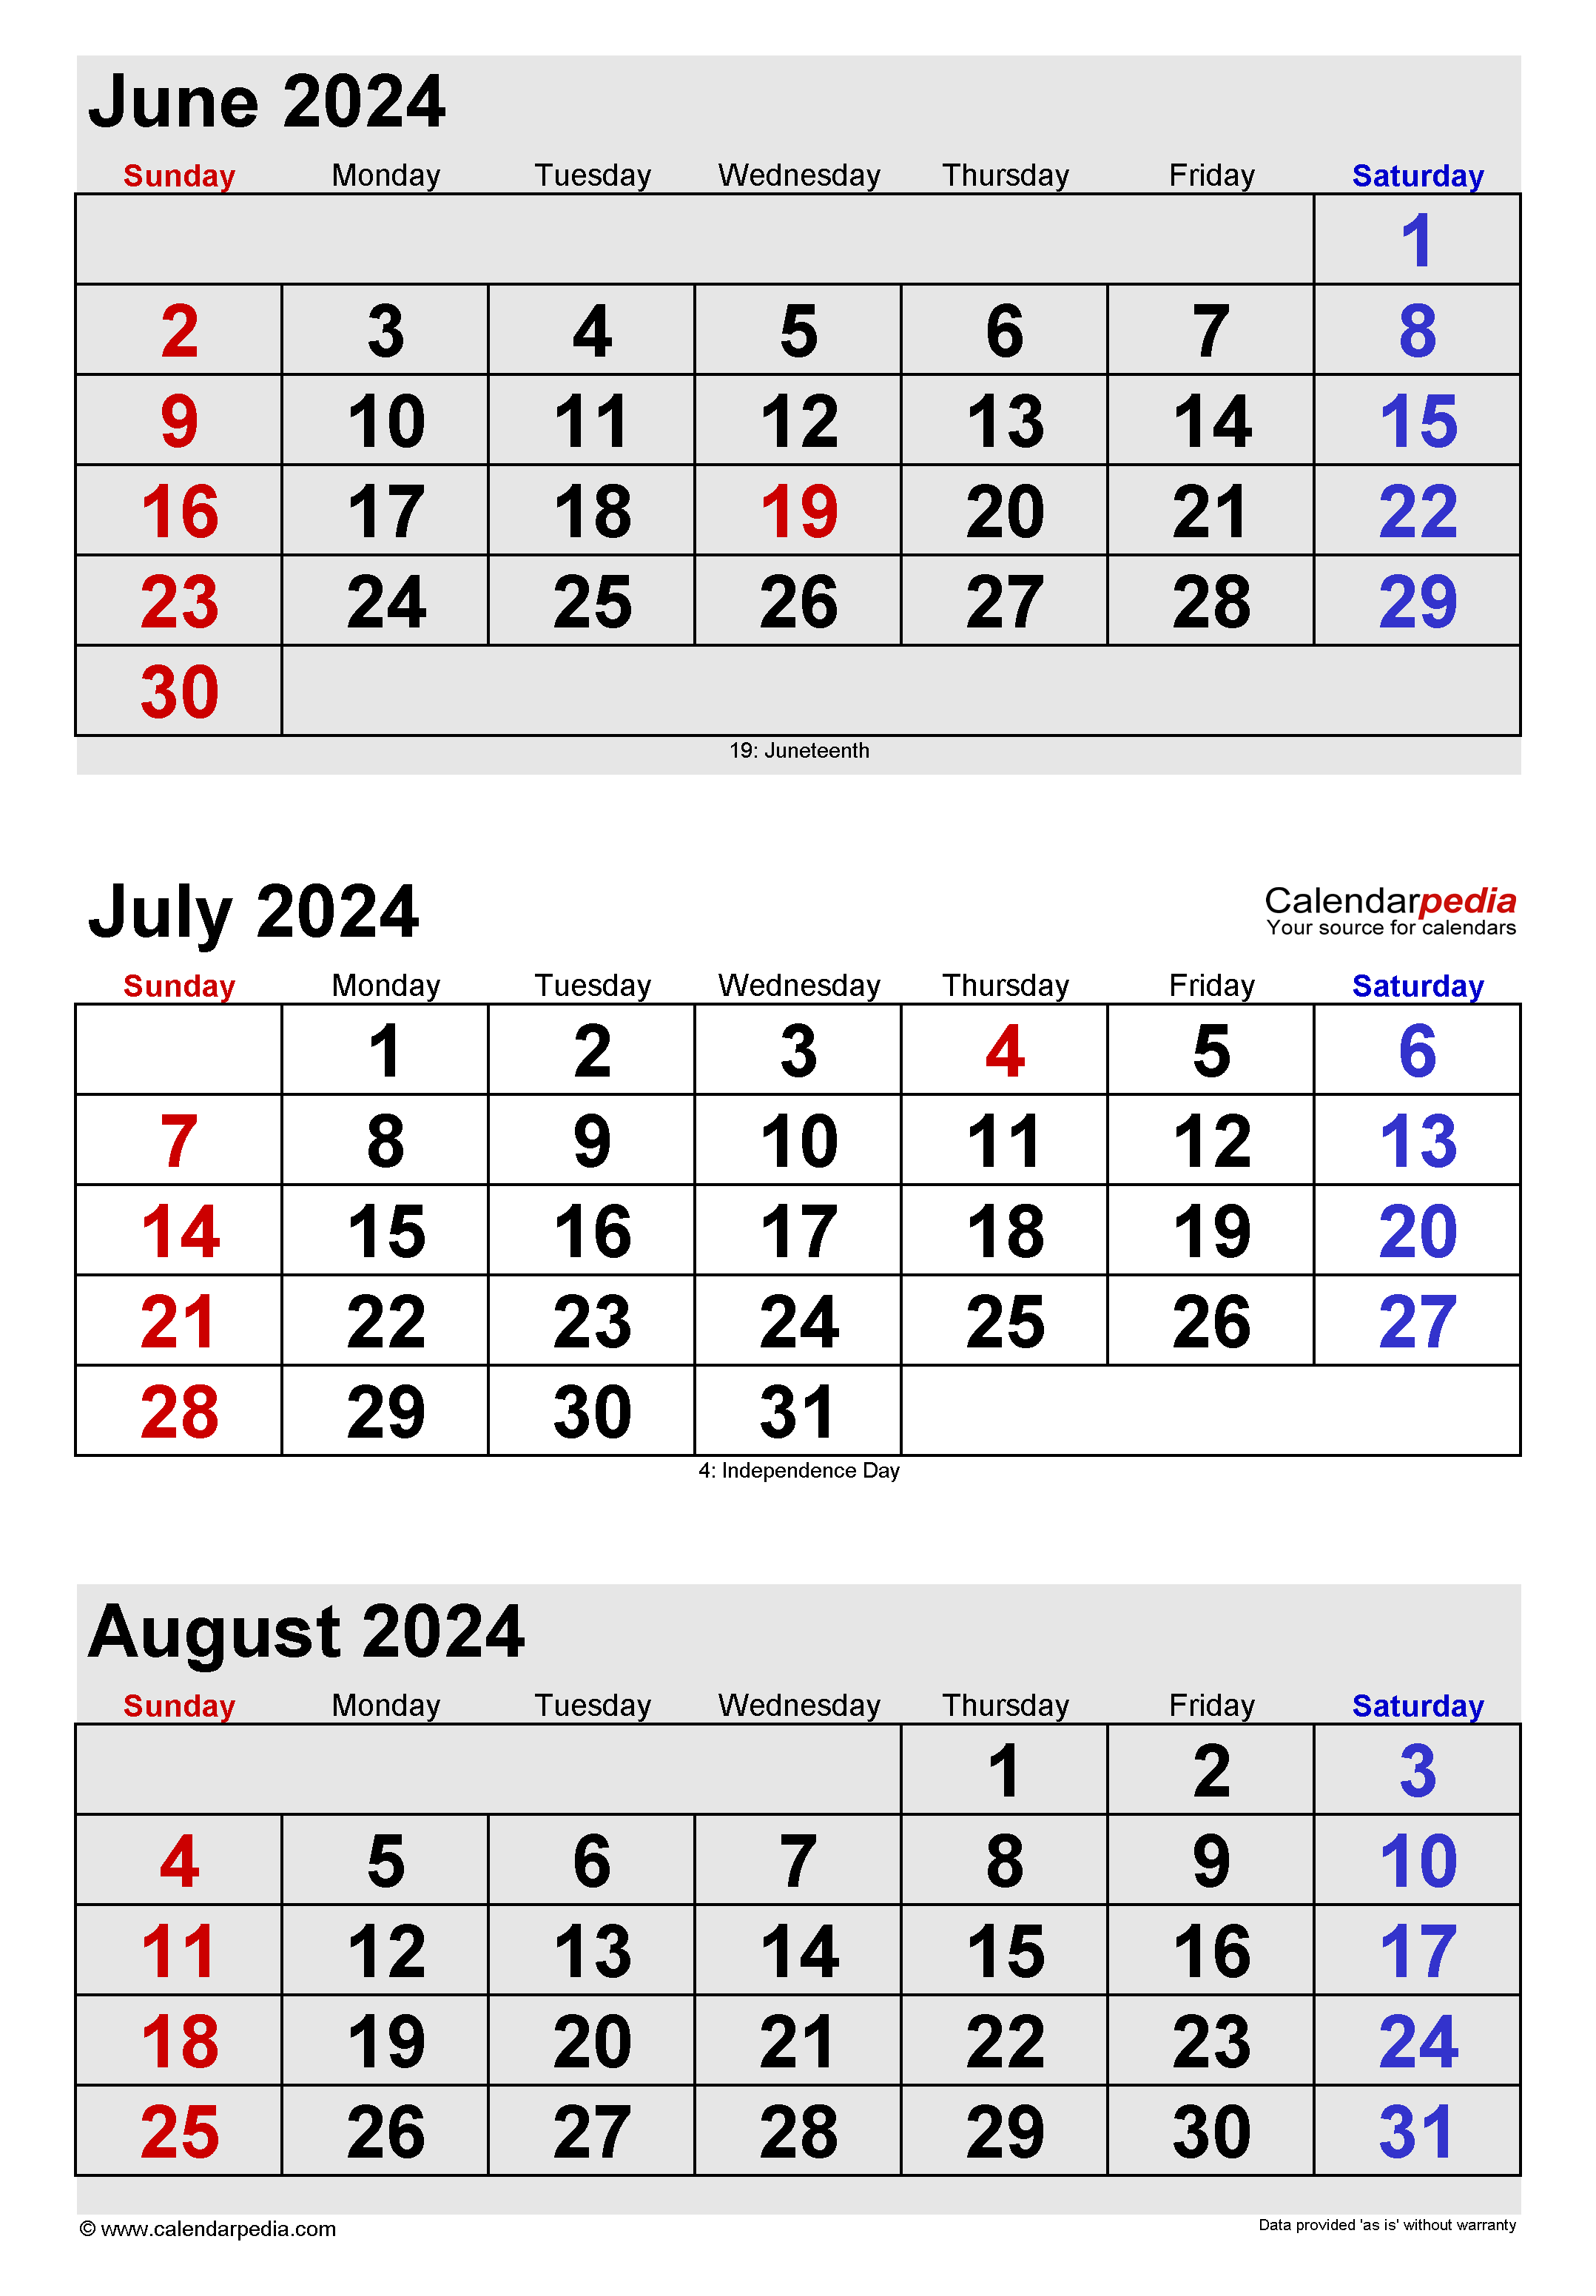 August 2024 July 2024 Calendar Printable 2024 CALENDAR PRINTABLE | Free Printable 2024 July And August Calendar